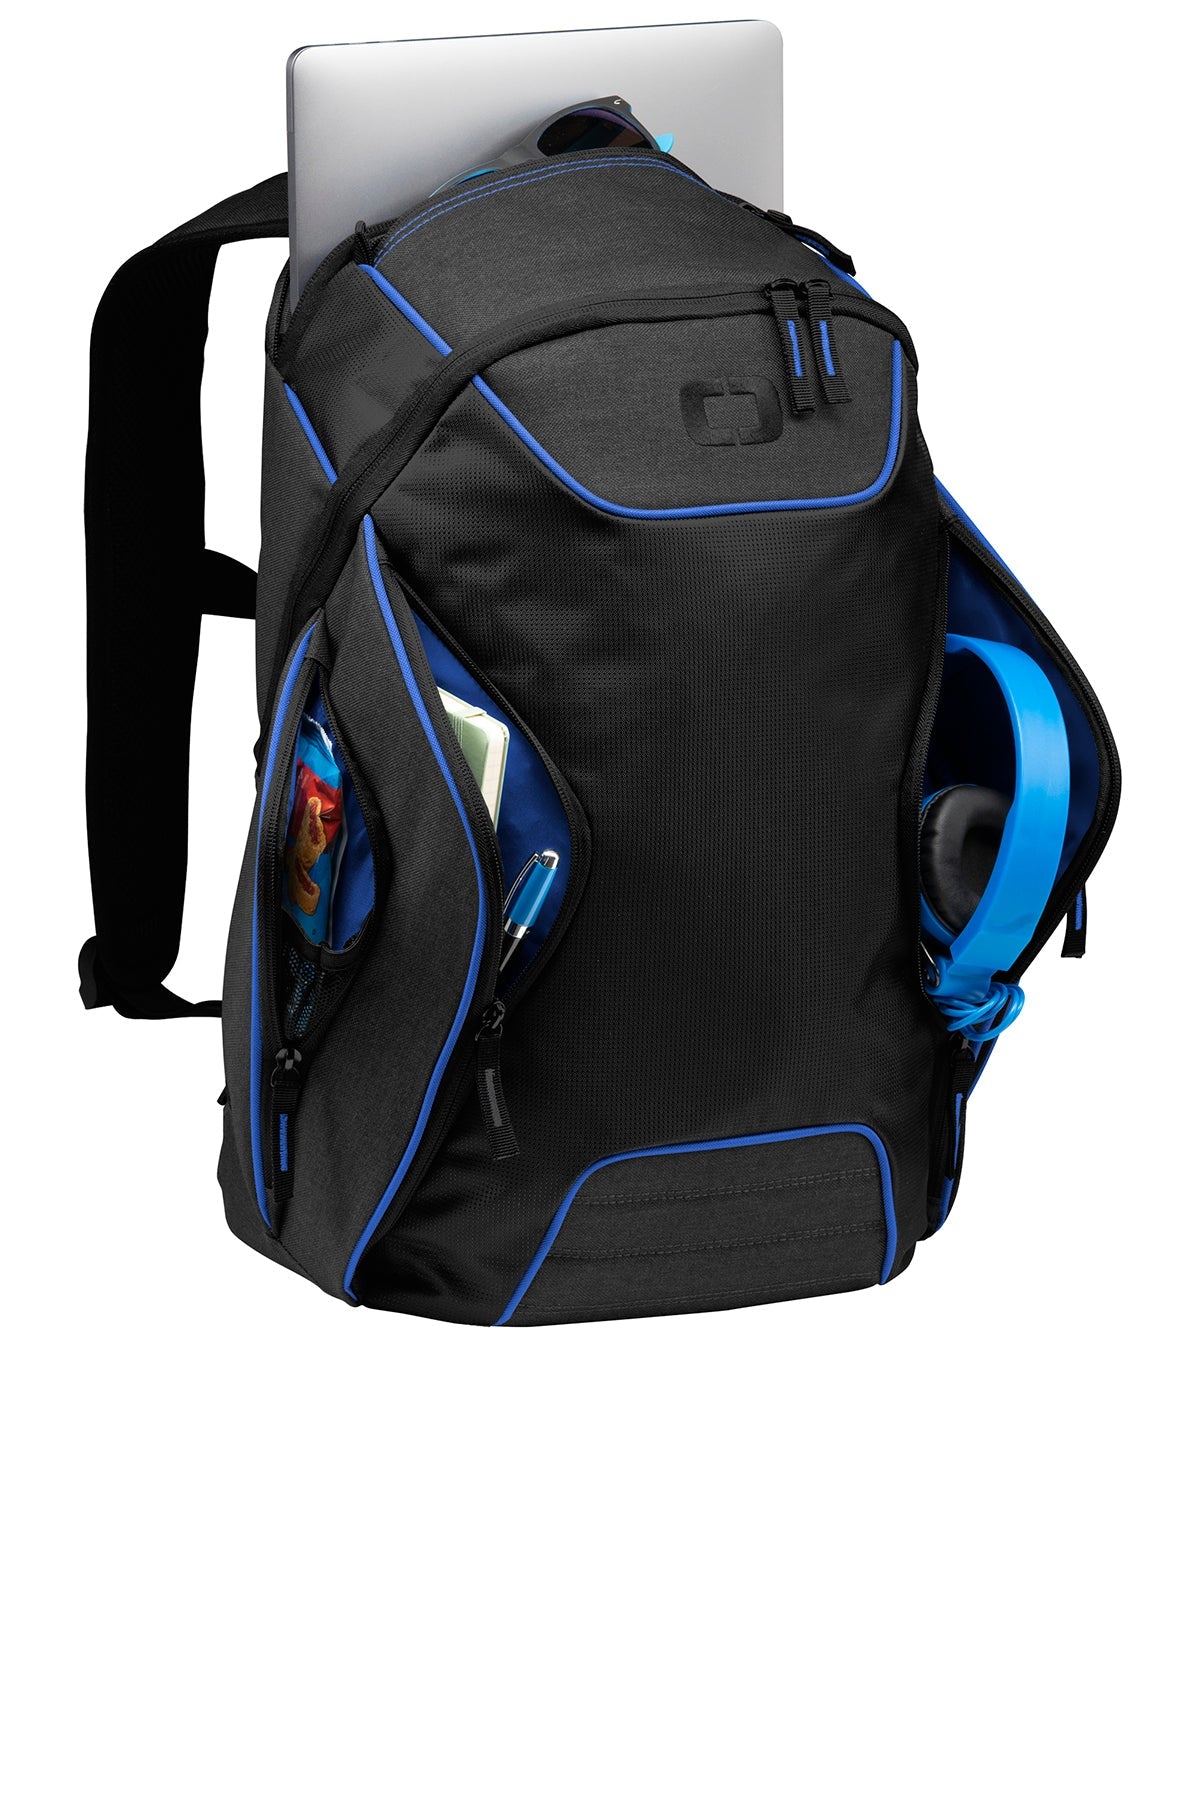 OGIO Hatch Customzied Backpacks, Electric Blue/ Heather Grey